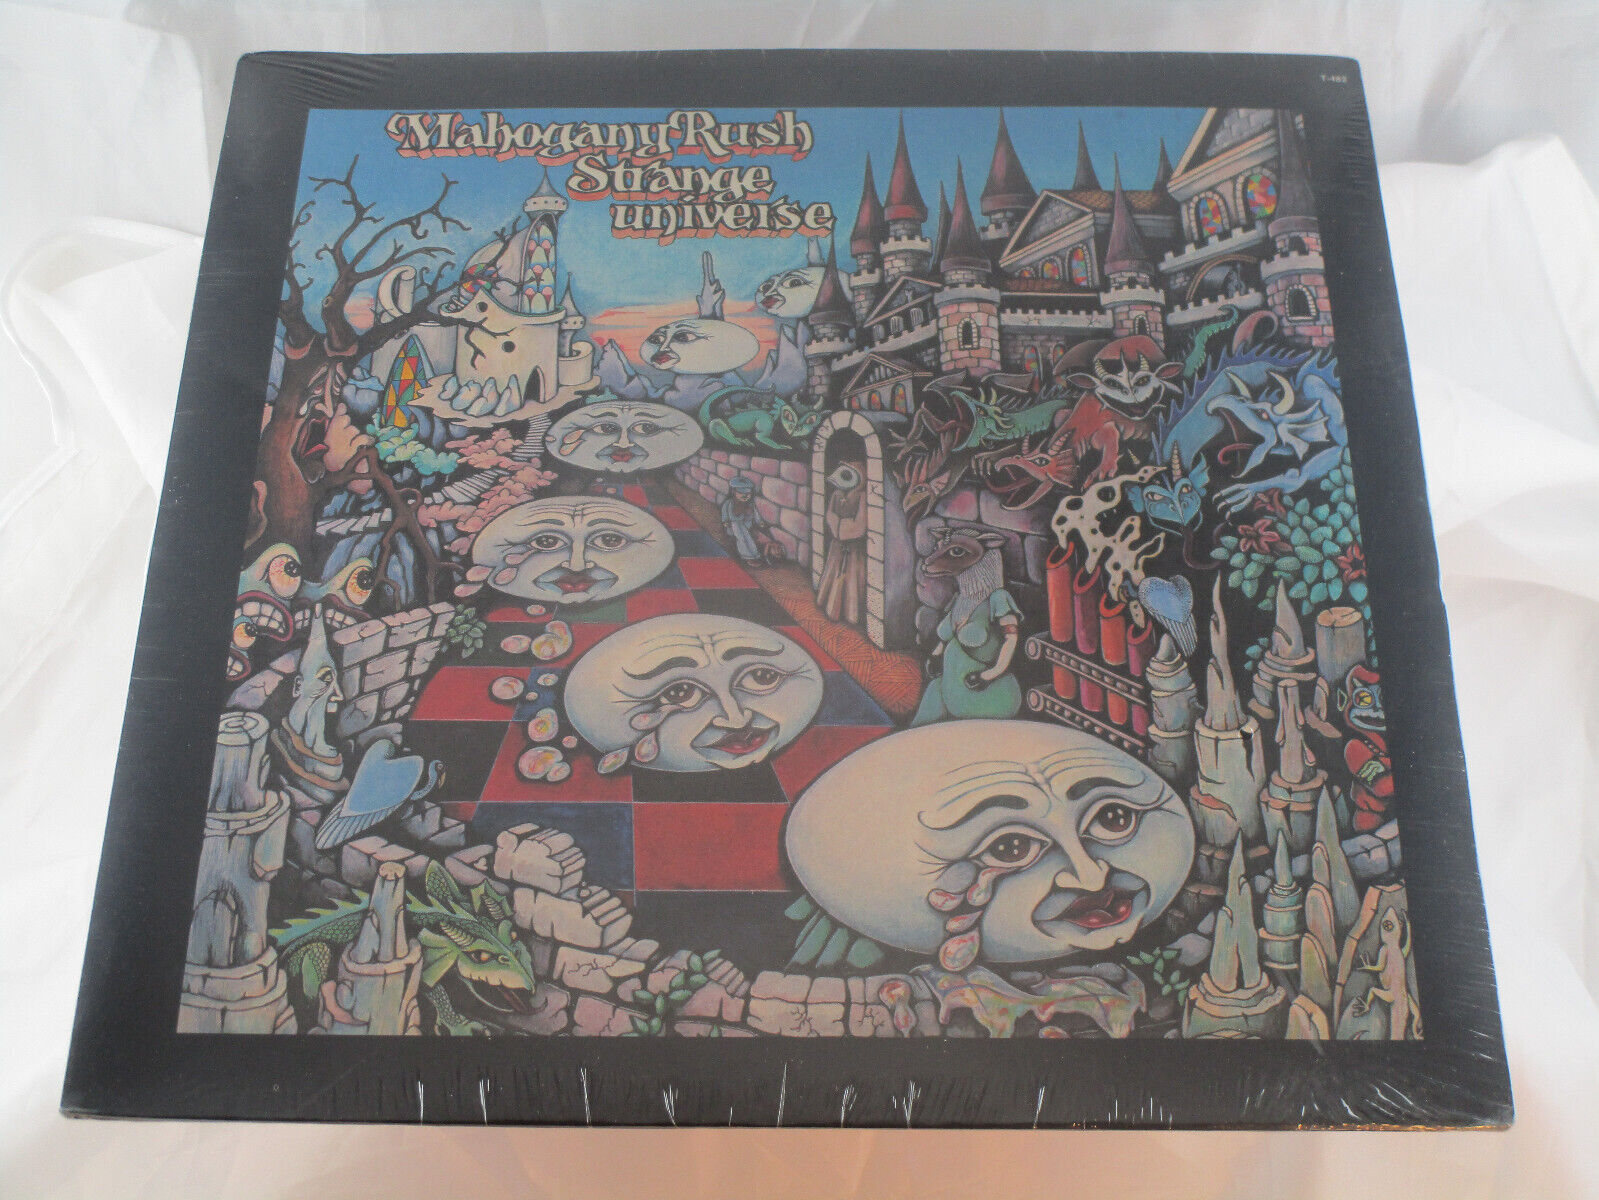 Mahogany Rush ‎Strange Universe Sealed Vinyl Record LP Album USA 1975 Orig T 482